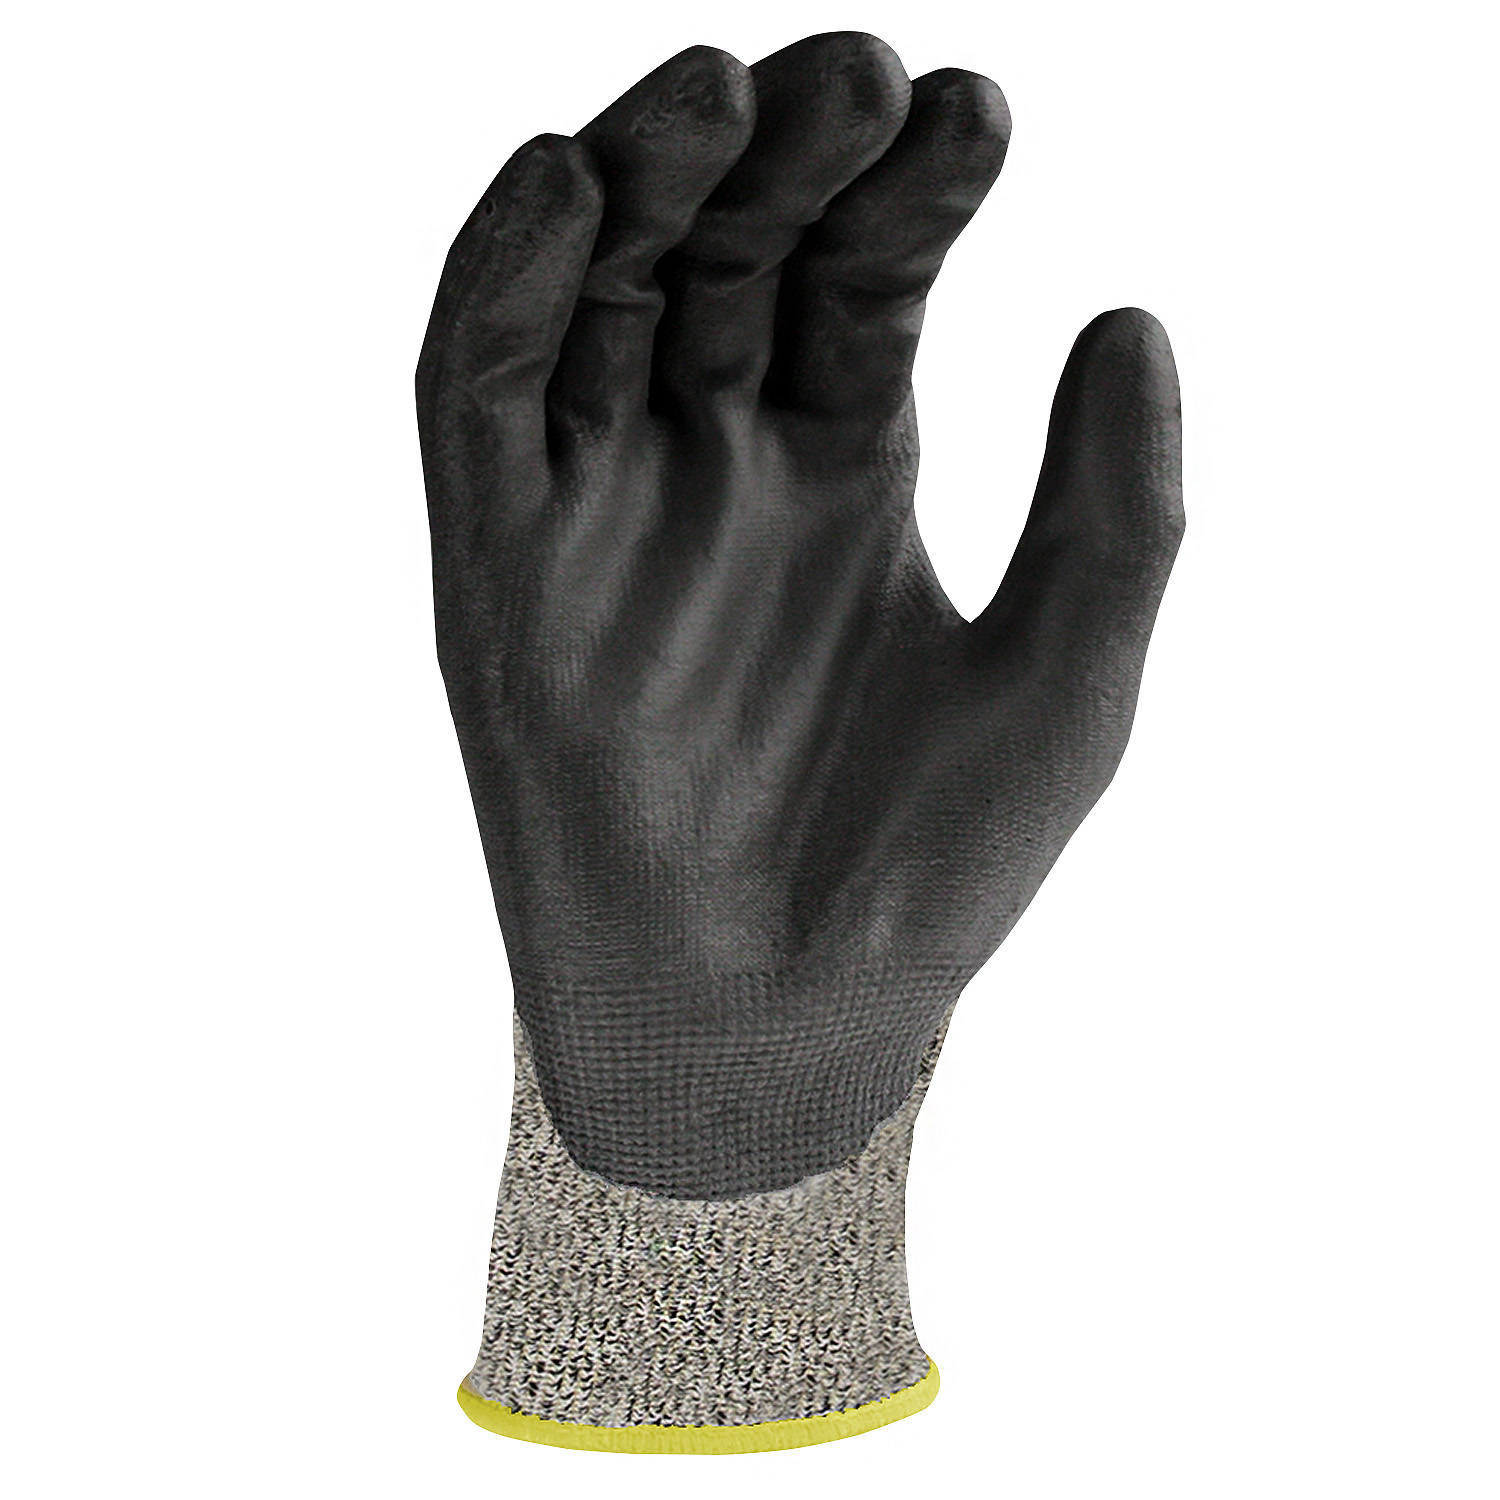 Gloves Cut Resistant Level 5 Large